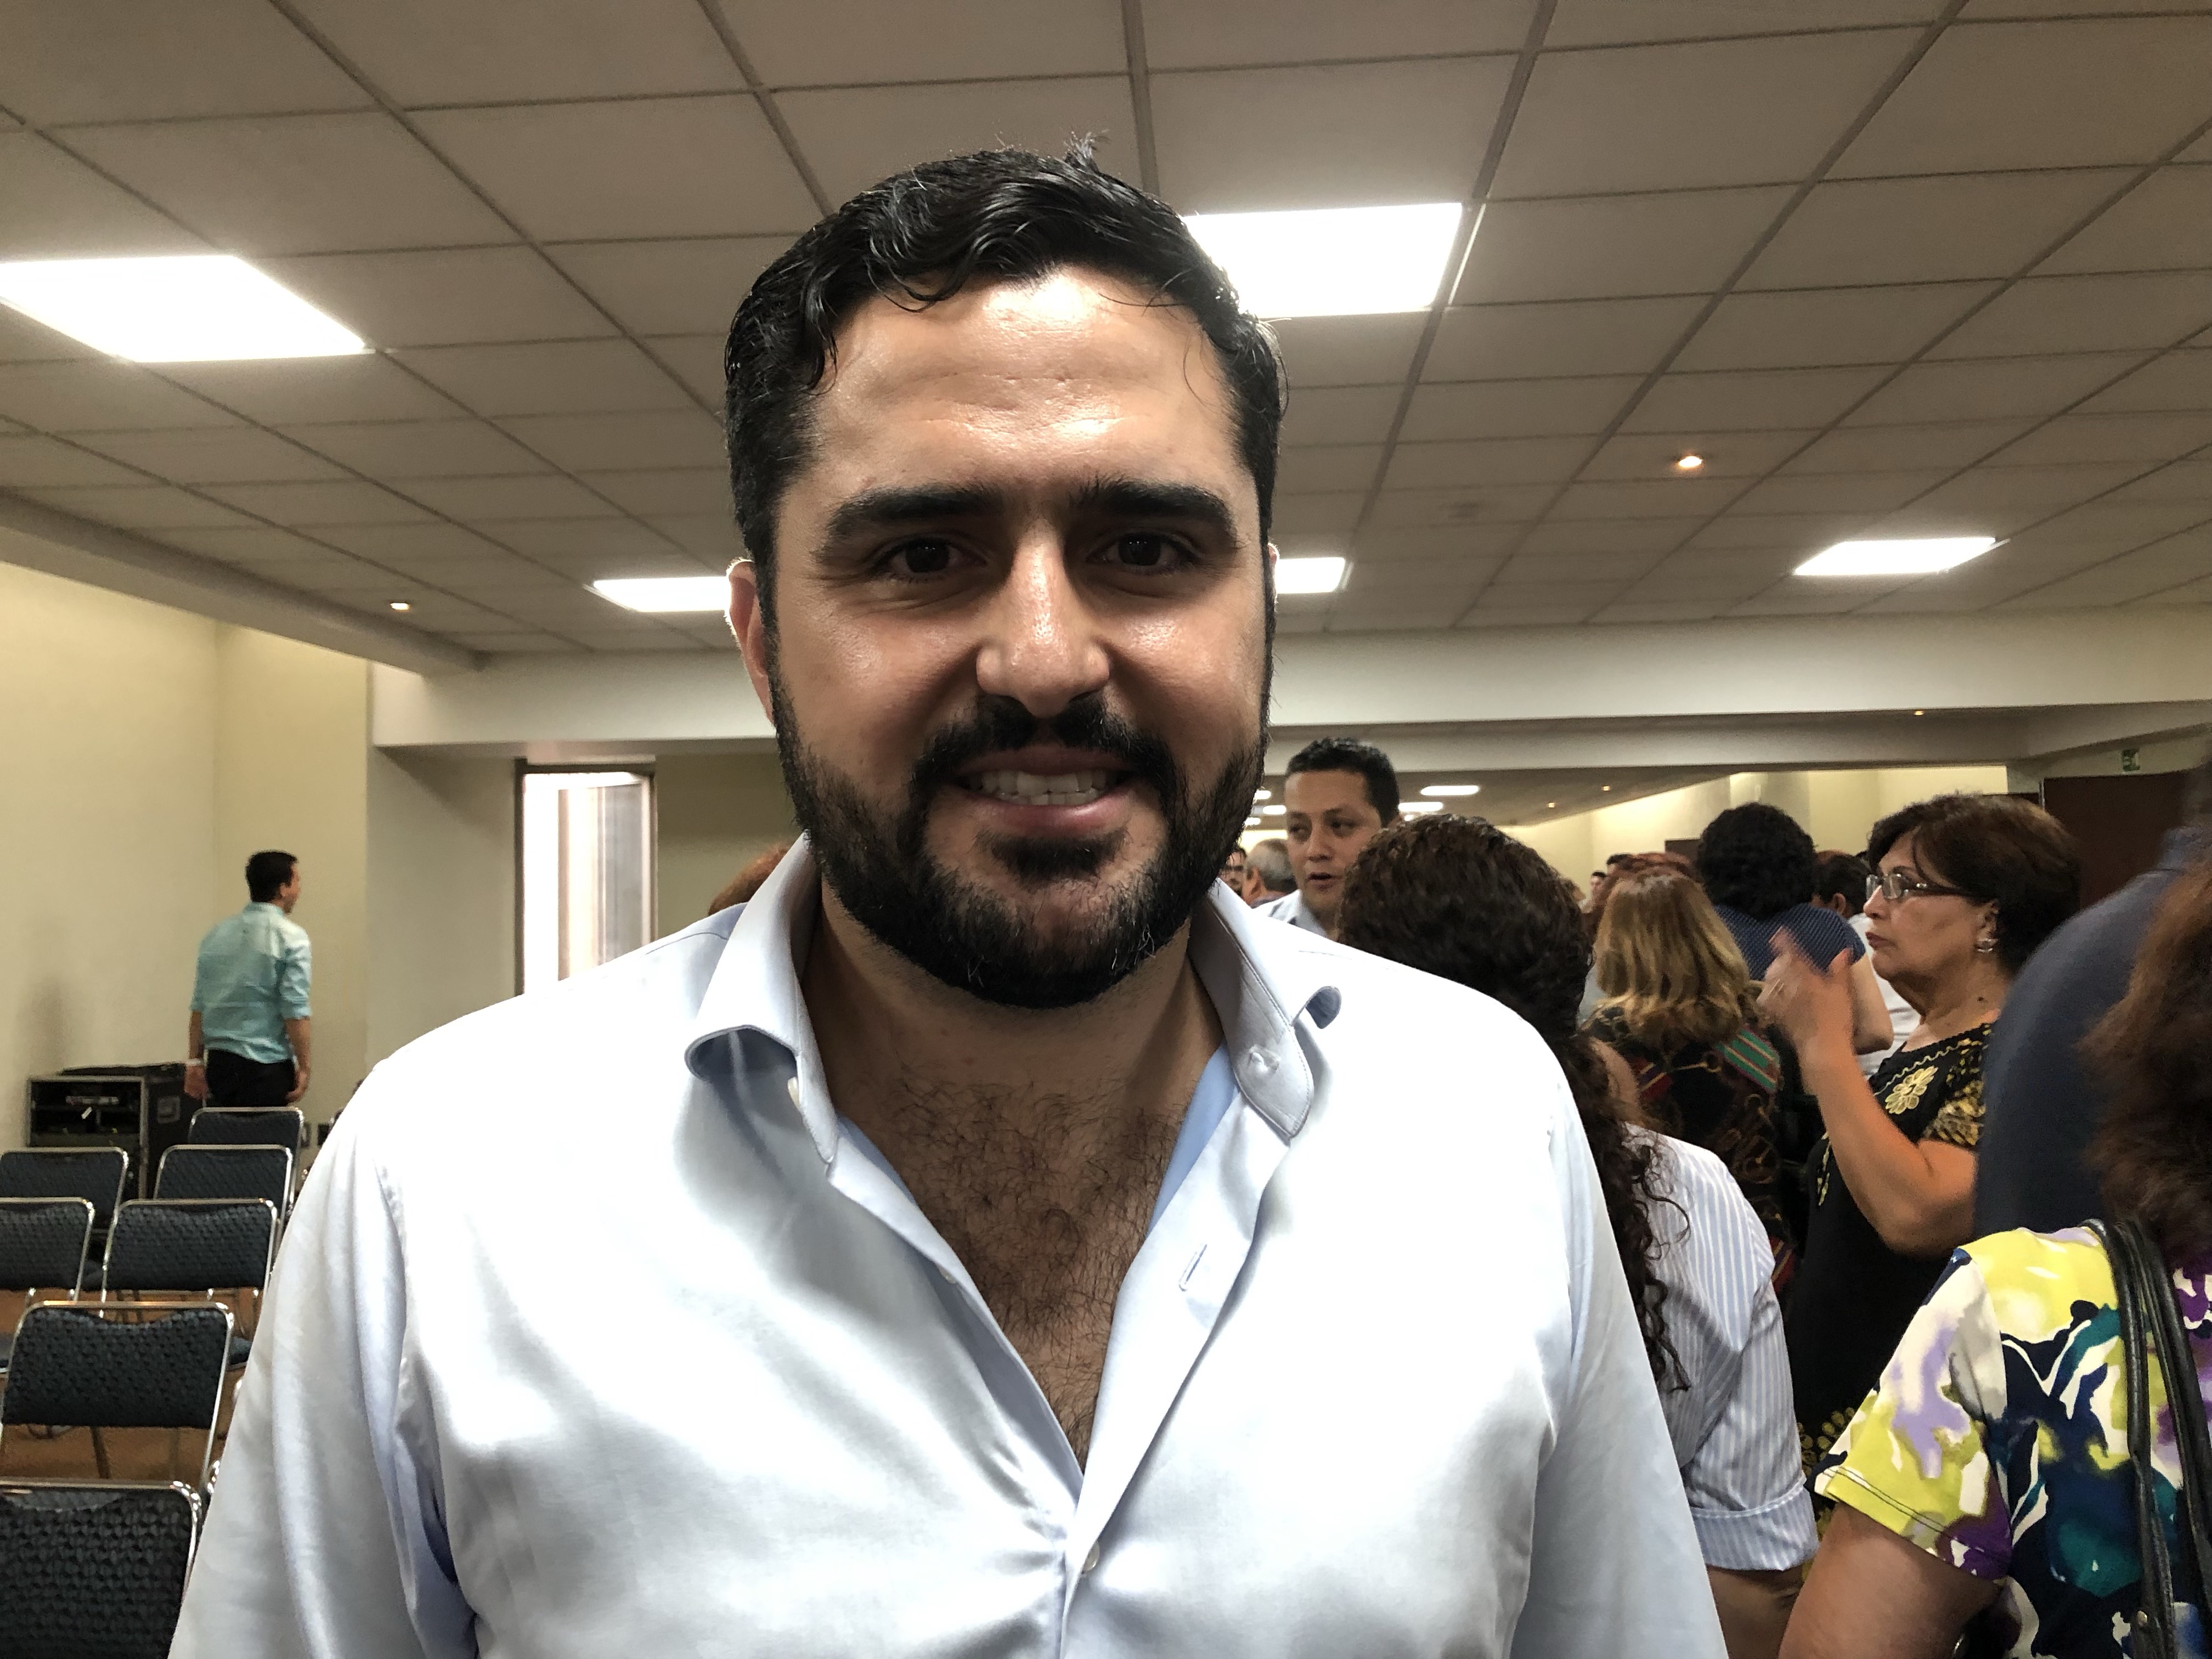  “Encuentro con Dresser costó 150 mil pesos al PAN”: Agustín Dorantes